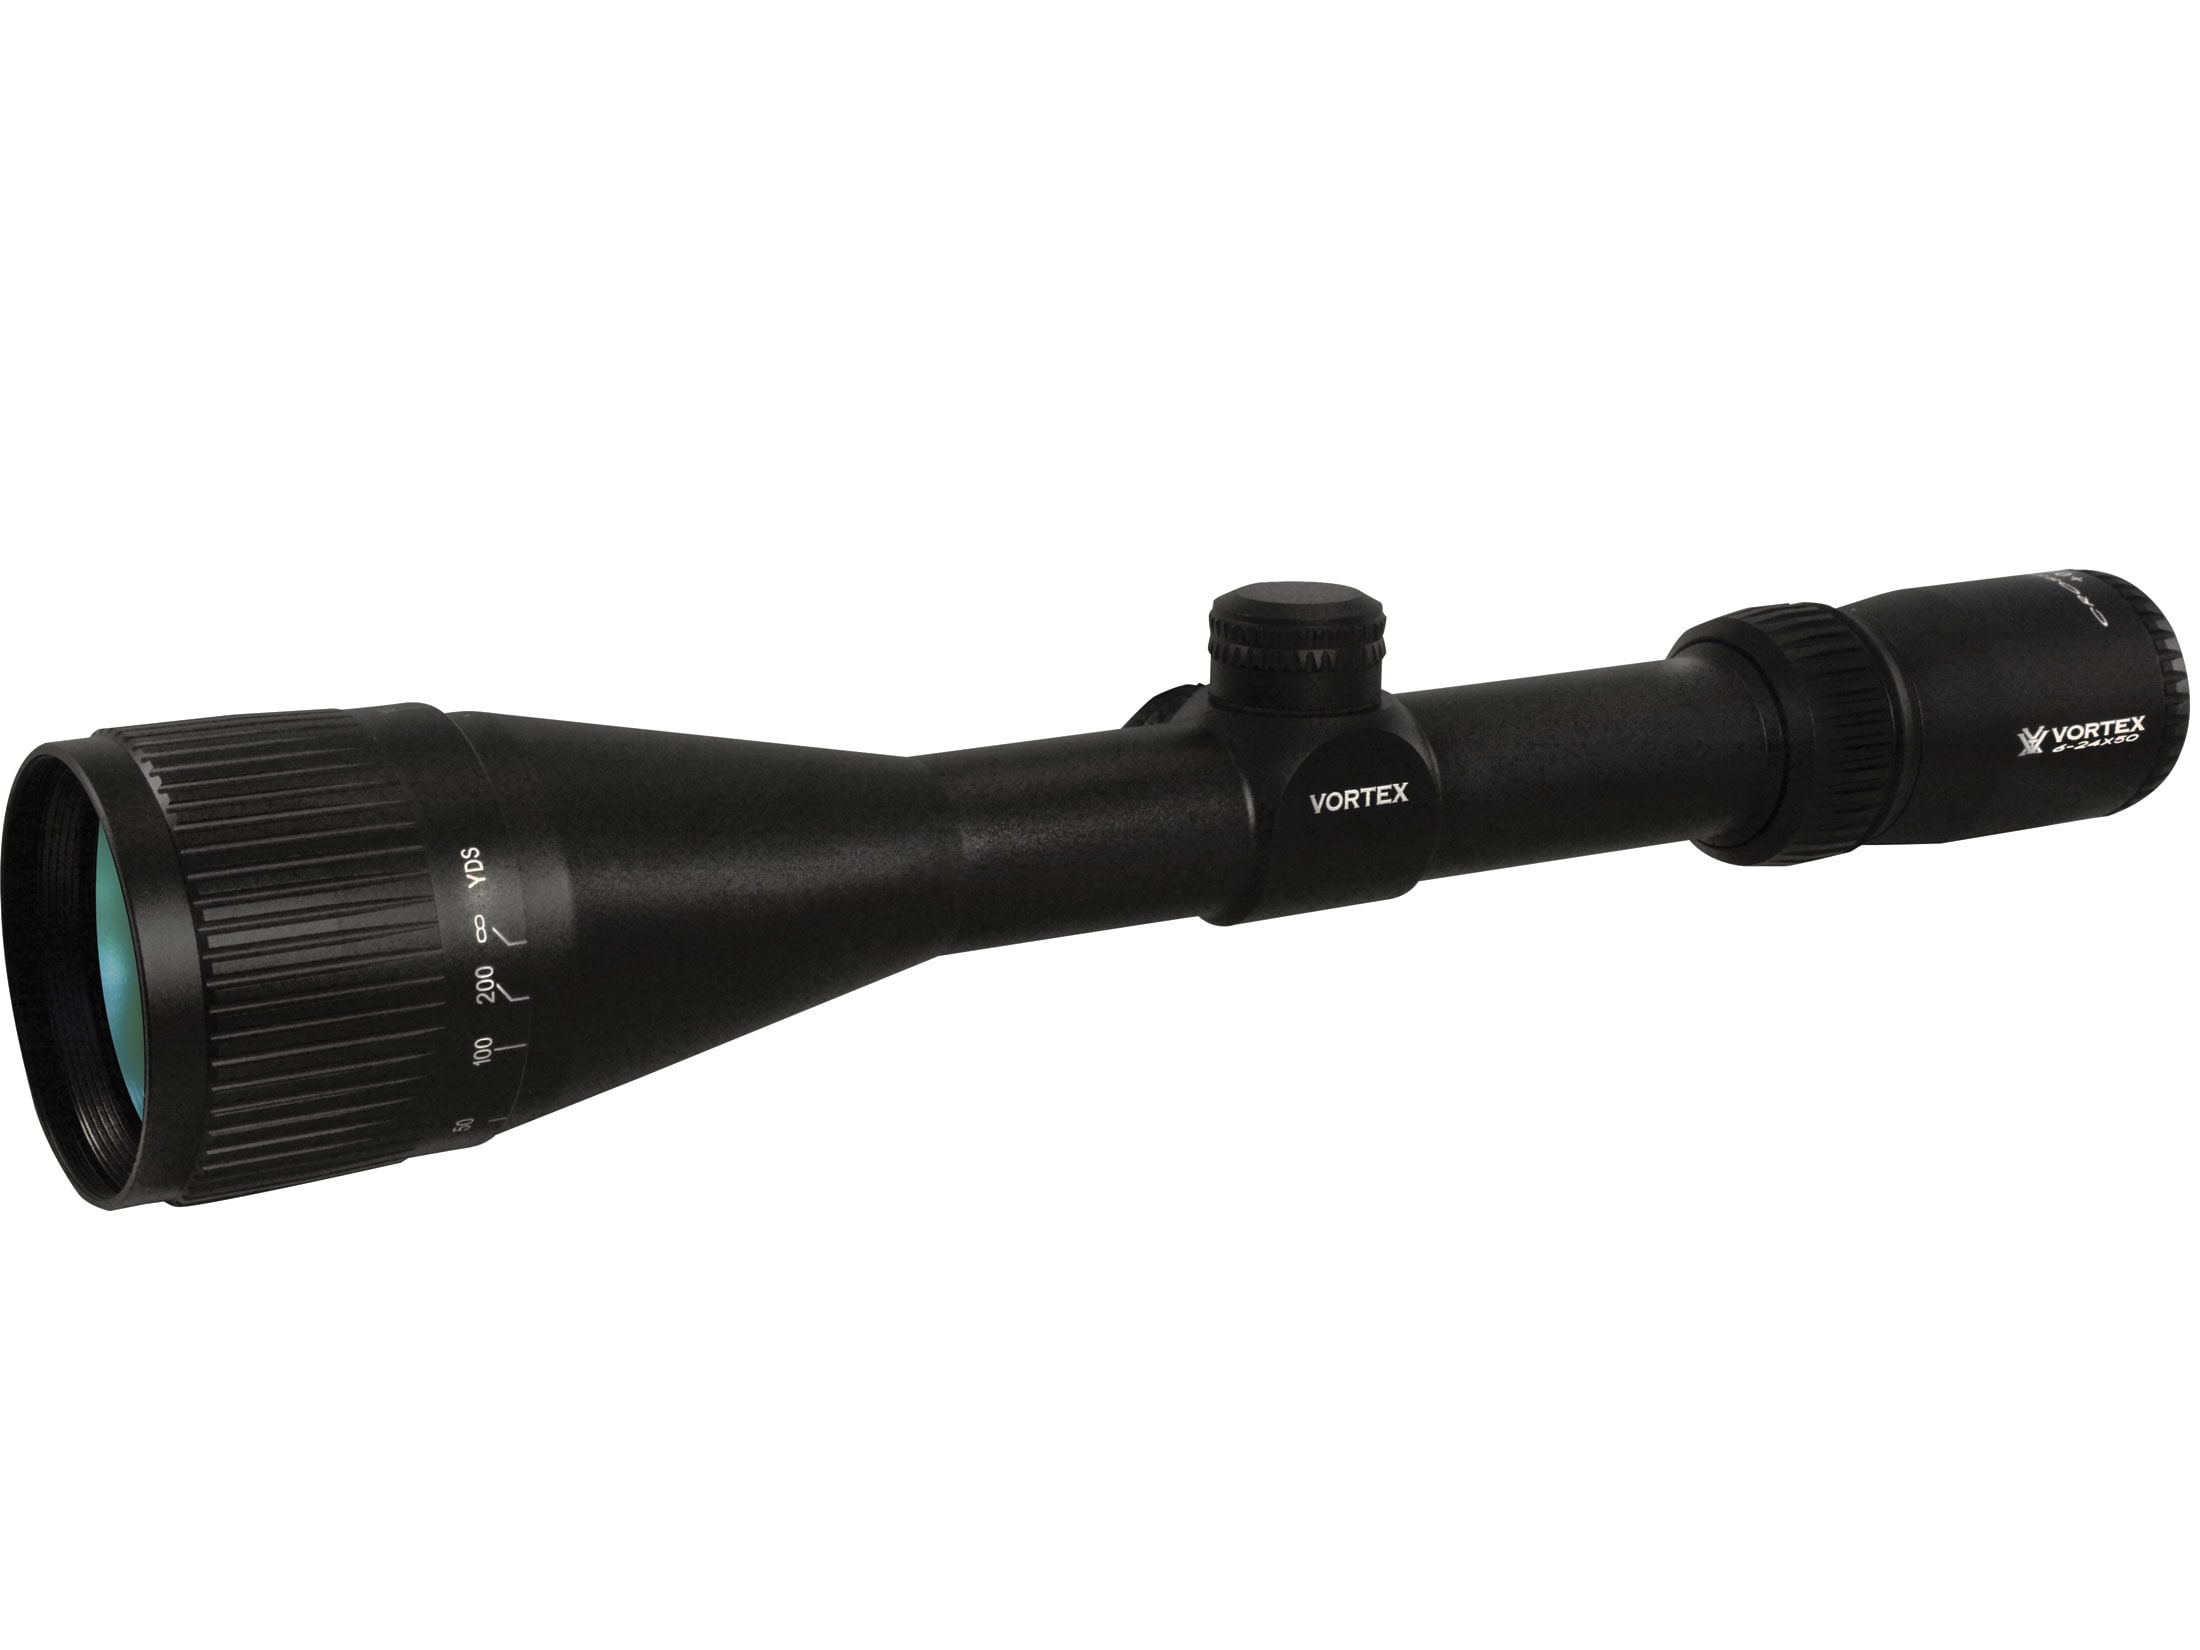 Vortex Optics Crossfire II Rifle Scope 6-24x 50mm Adjustable Objective Dead-Hold BDC Reticle Matte For Sale